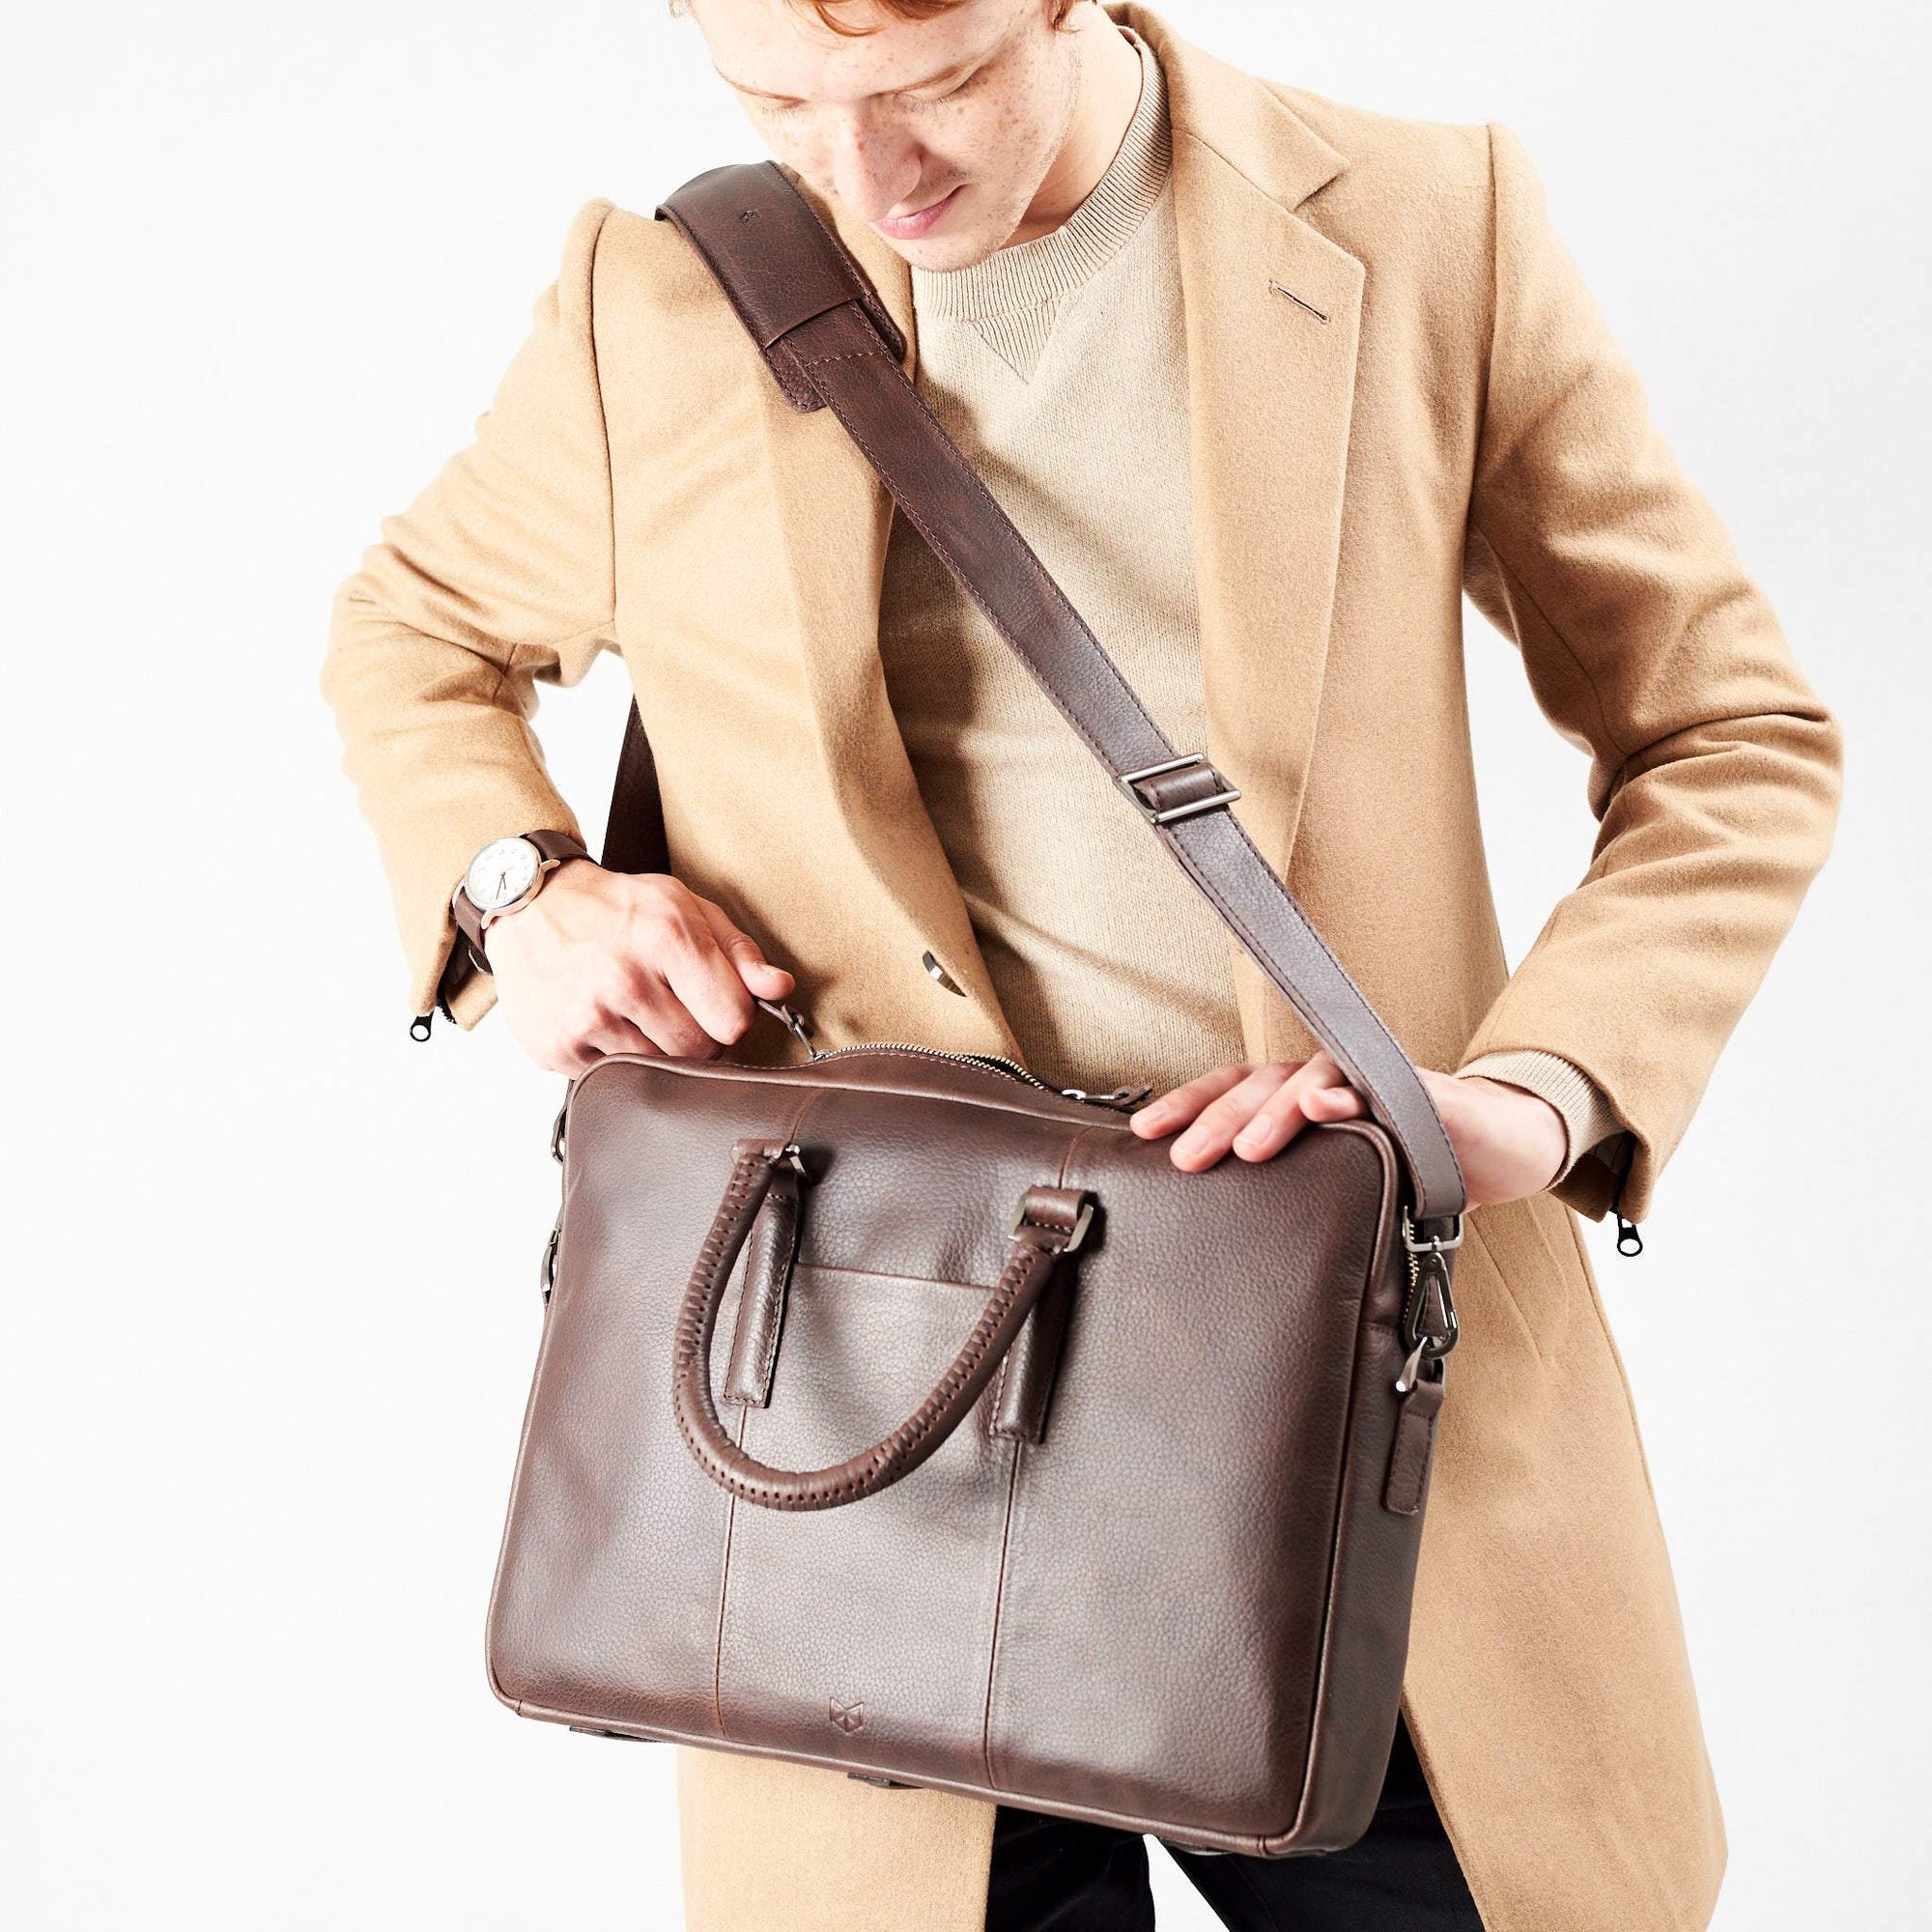 Shoulder bag in use by model. Dark Brown leather briefcase laptop bag for men. Gazeli laptop briefcase by Capra Leather